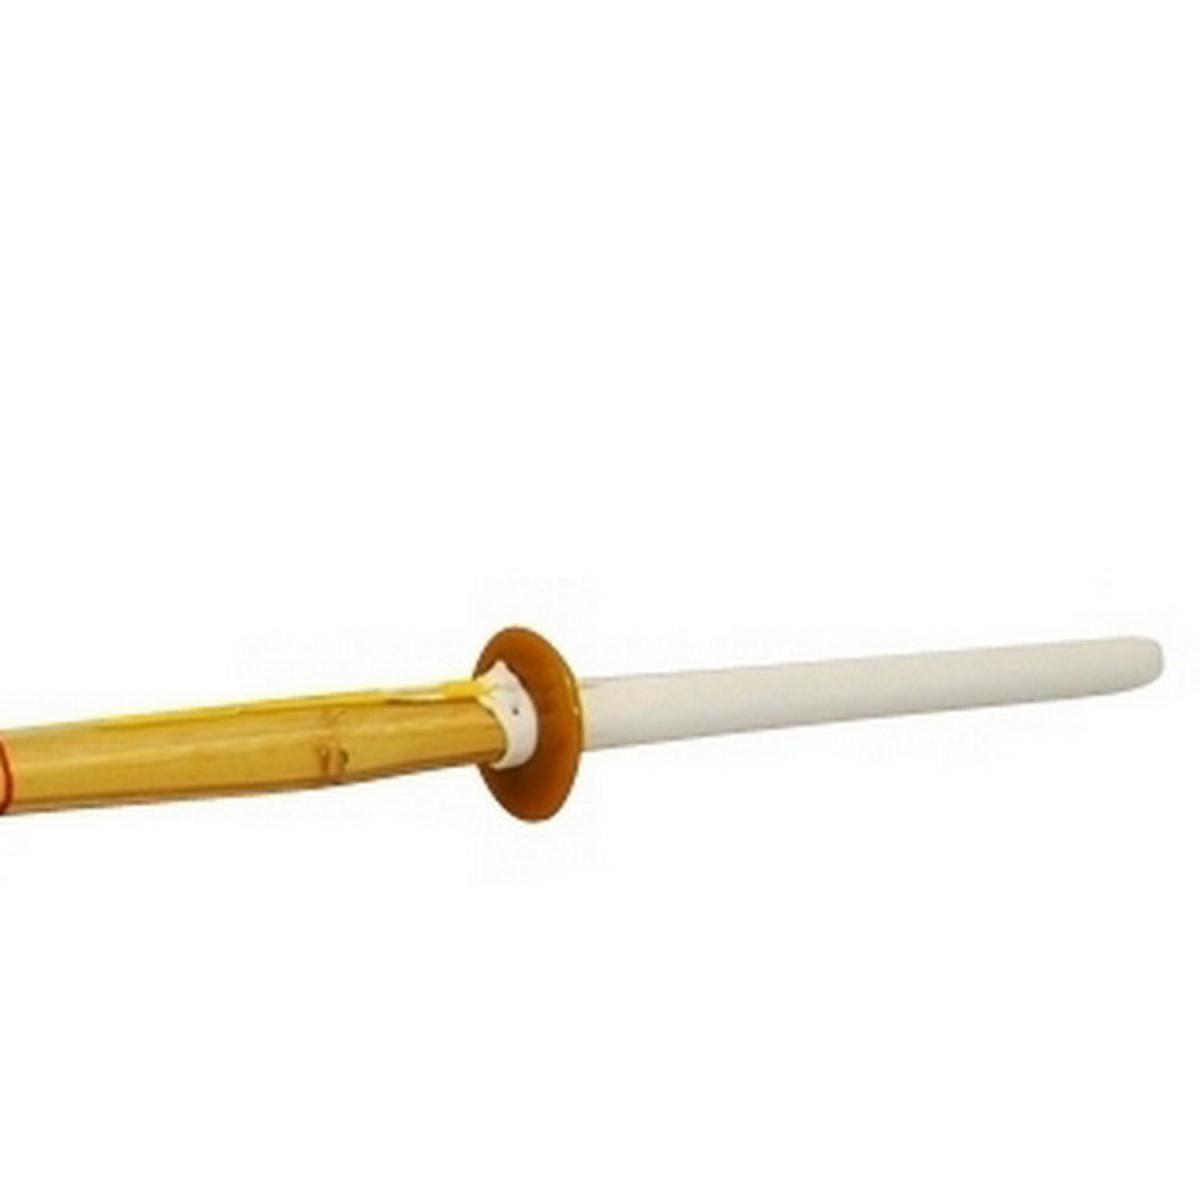 Shinai 115 cm (37) for Kendo ➤ www.bokken-wshop.de✅ suitable for Aikido, Kendo, Koryu, Kenjutsu, Yoseikan, Jodot✅ Your Kendo specialist dealer!